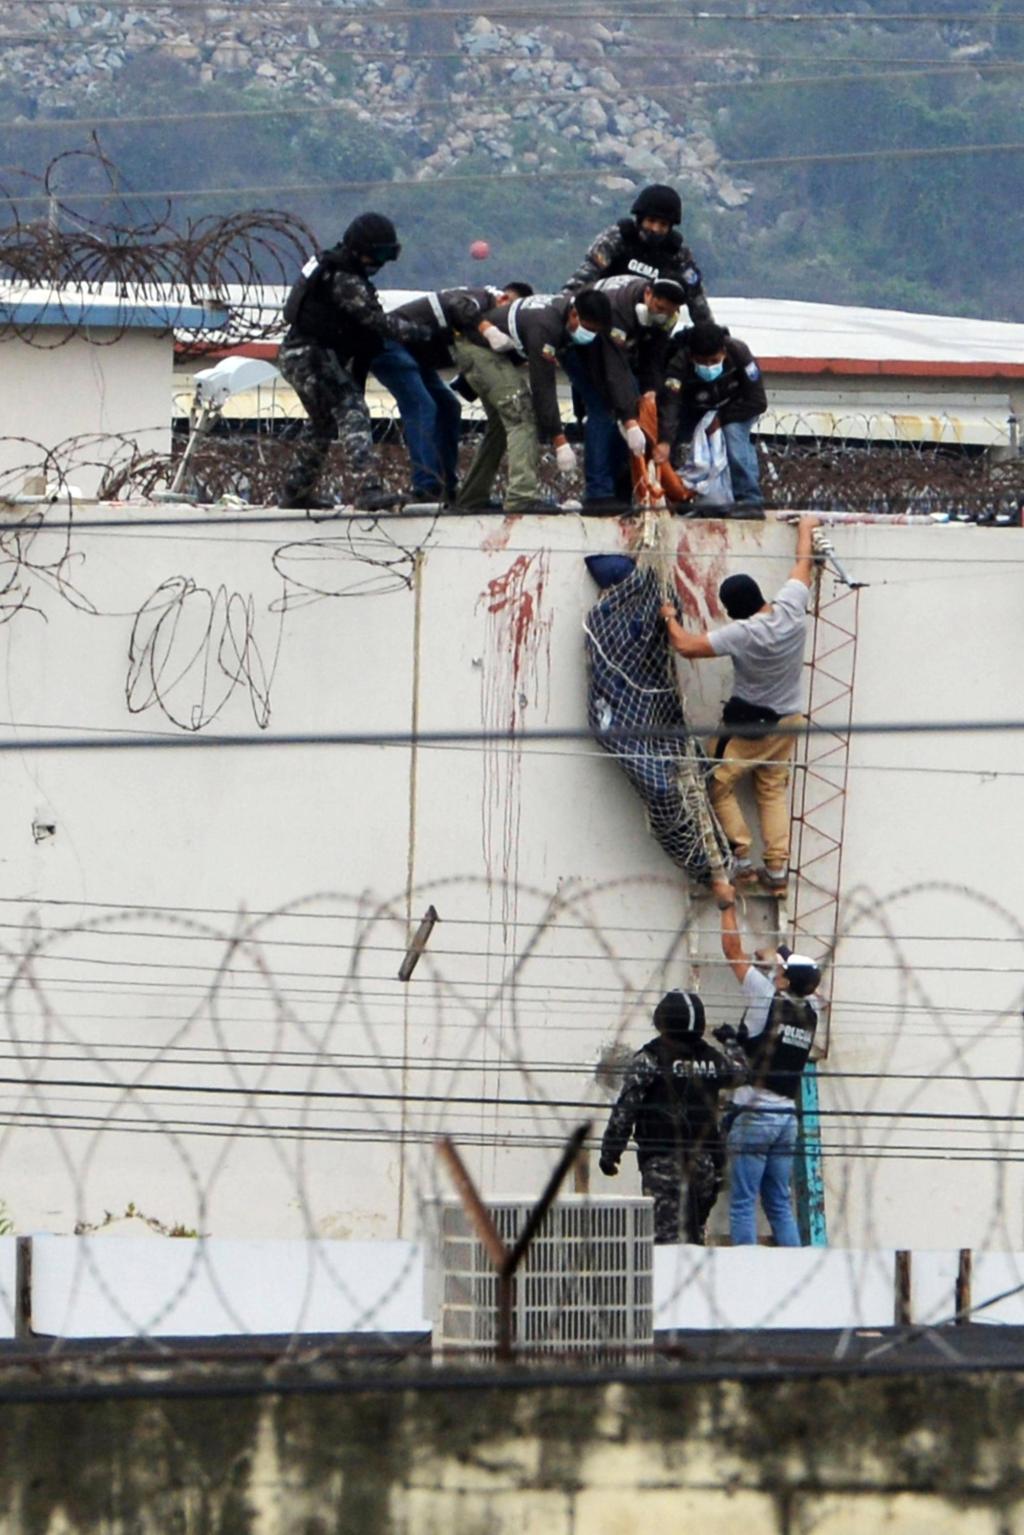 Battle Among Ecuador Prison Gangs Kills At Least 68 Inmates The Denver Post Patabook News